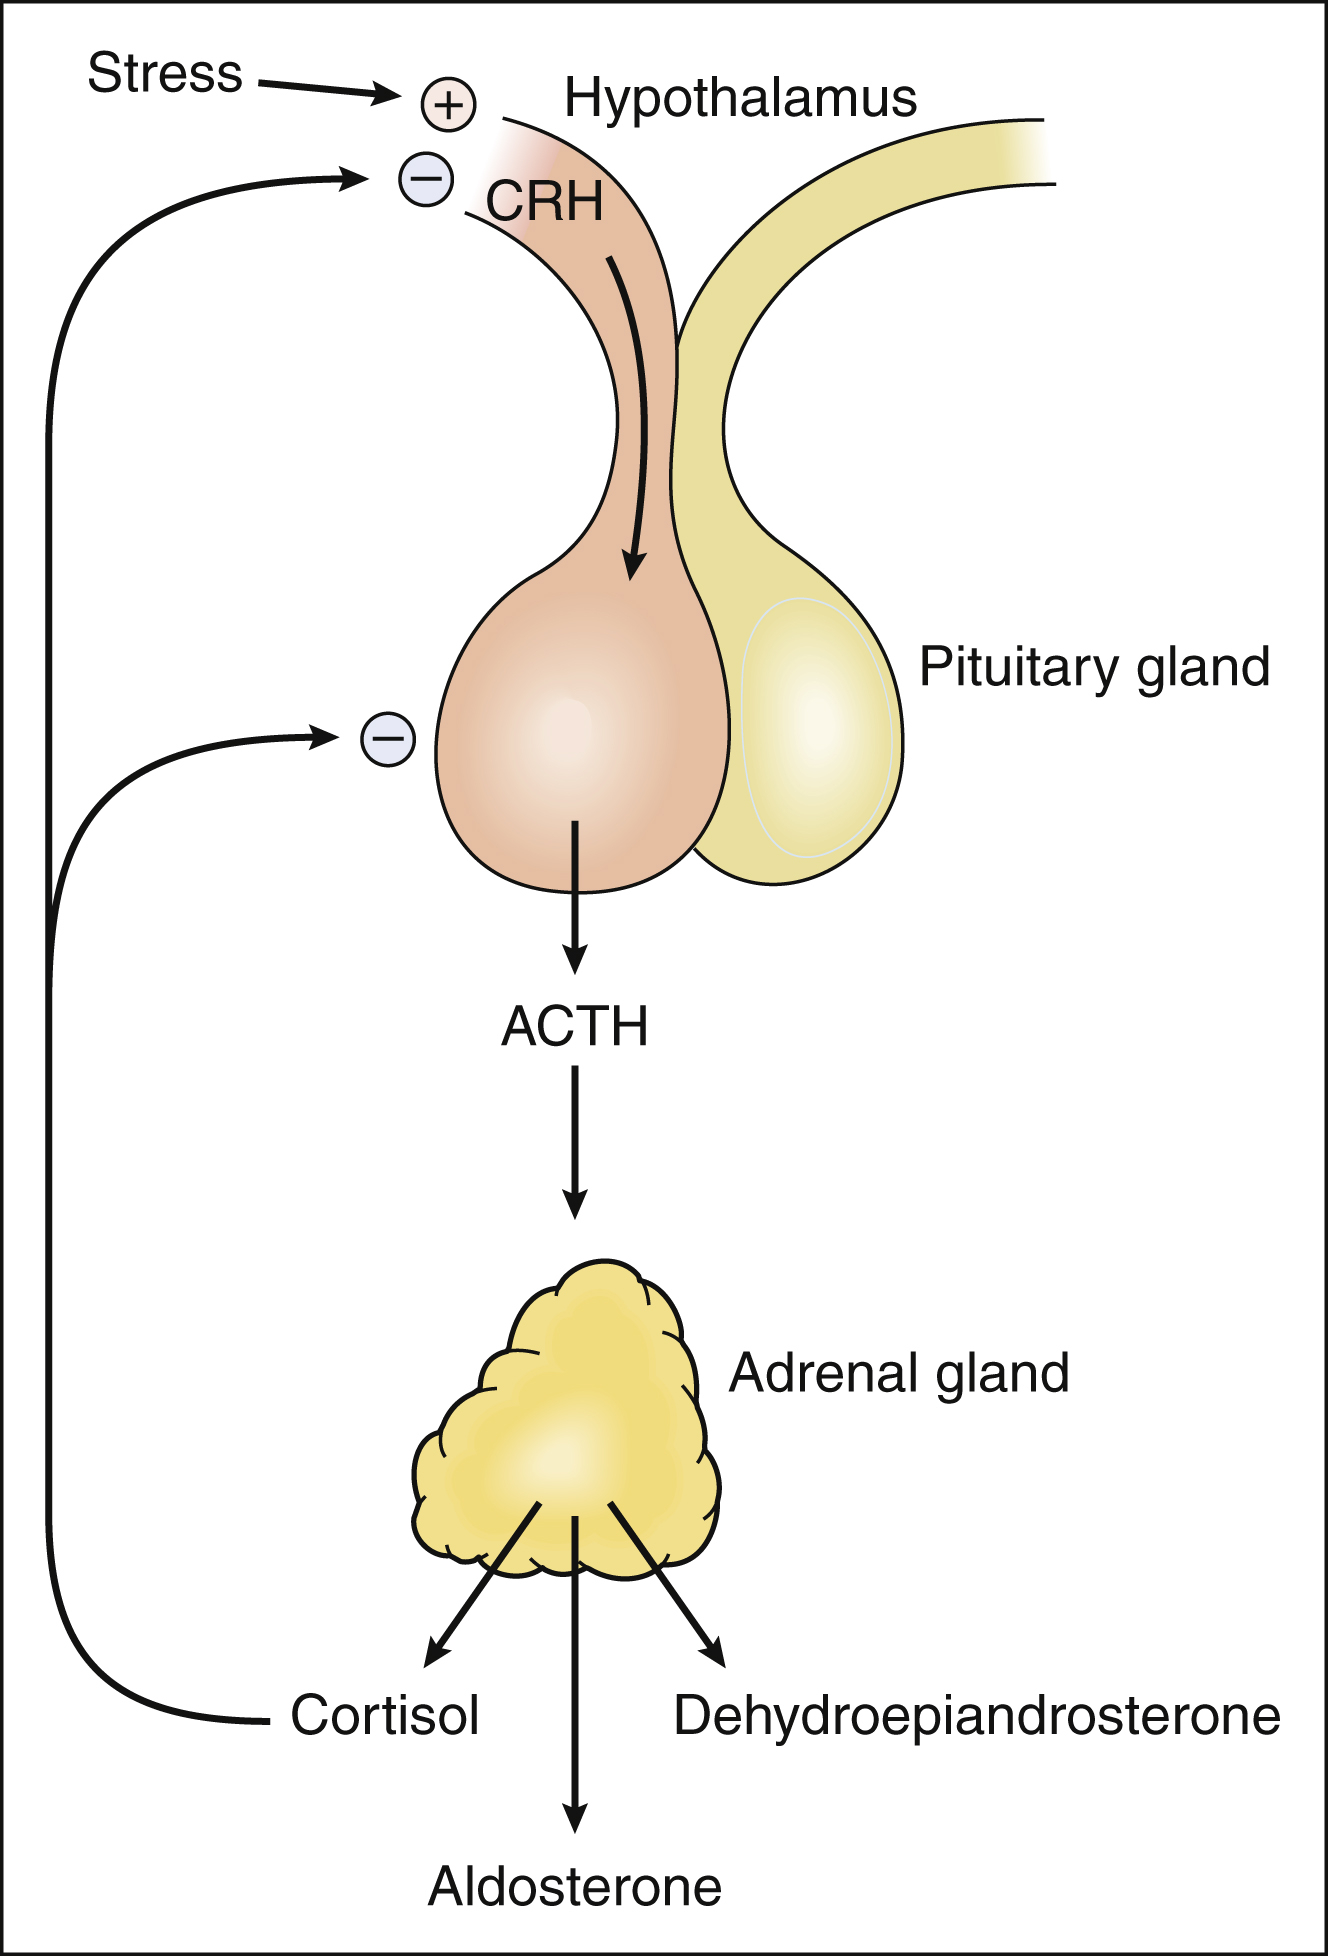 adrenal cortex produces